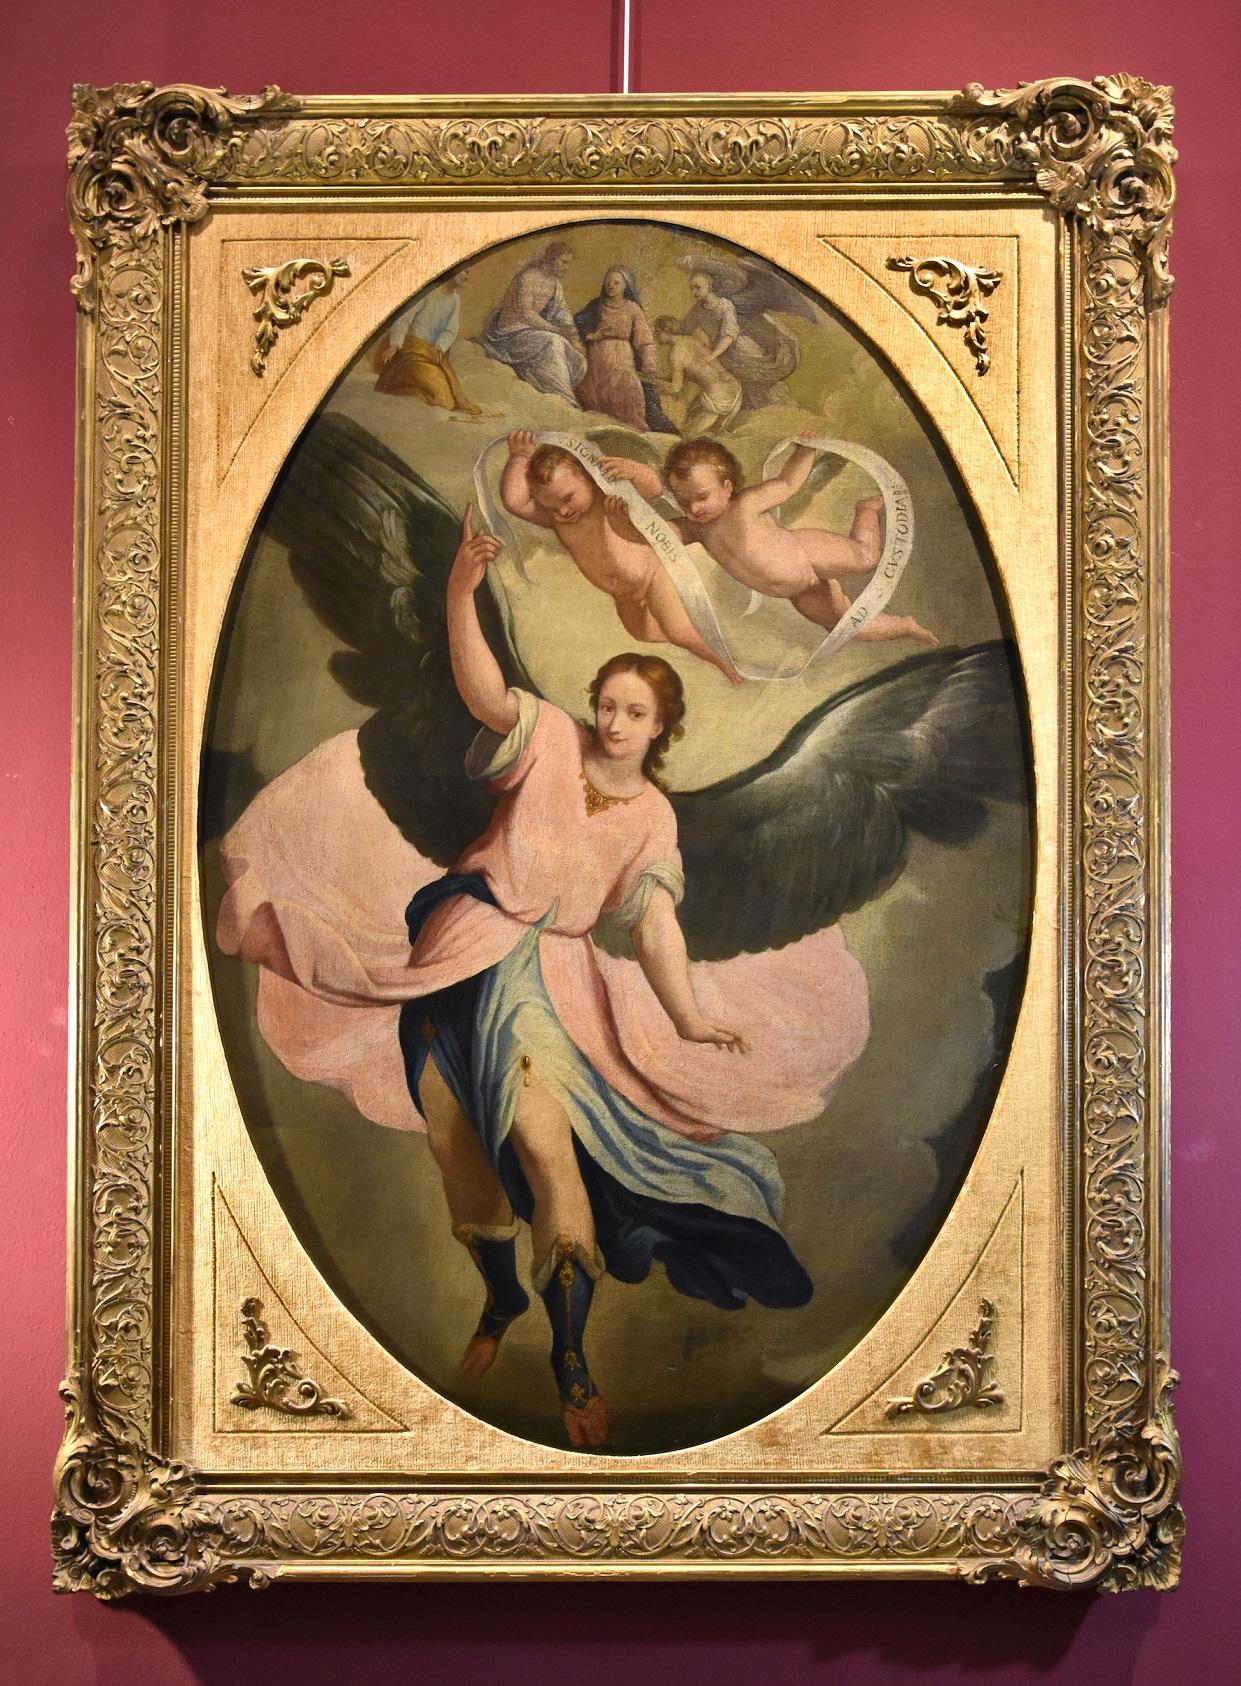 Guardian Angel Ridolfi Paint Oil on canvas Old master 17/18th Century Italy - Painting by Claudio Ridolfi (Verona, c. 1570 - Corinaldo, 1644)